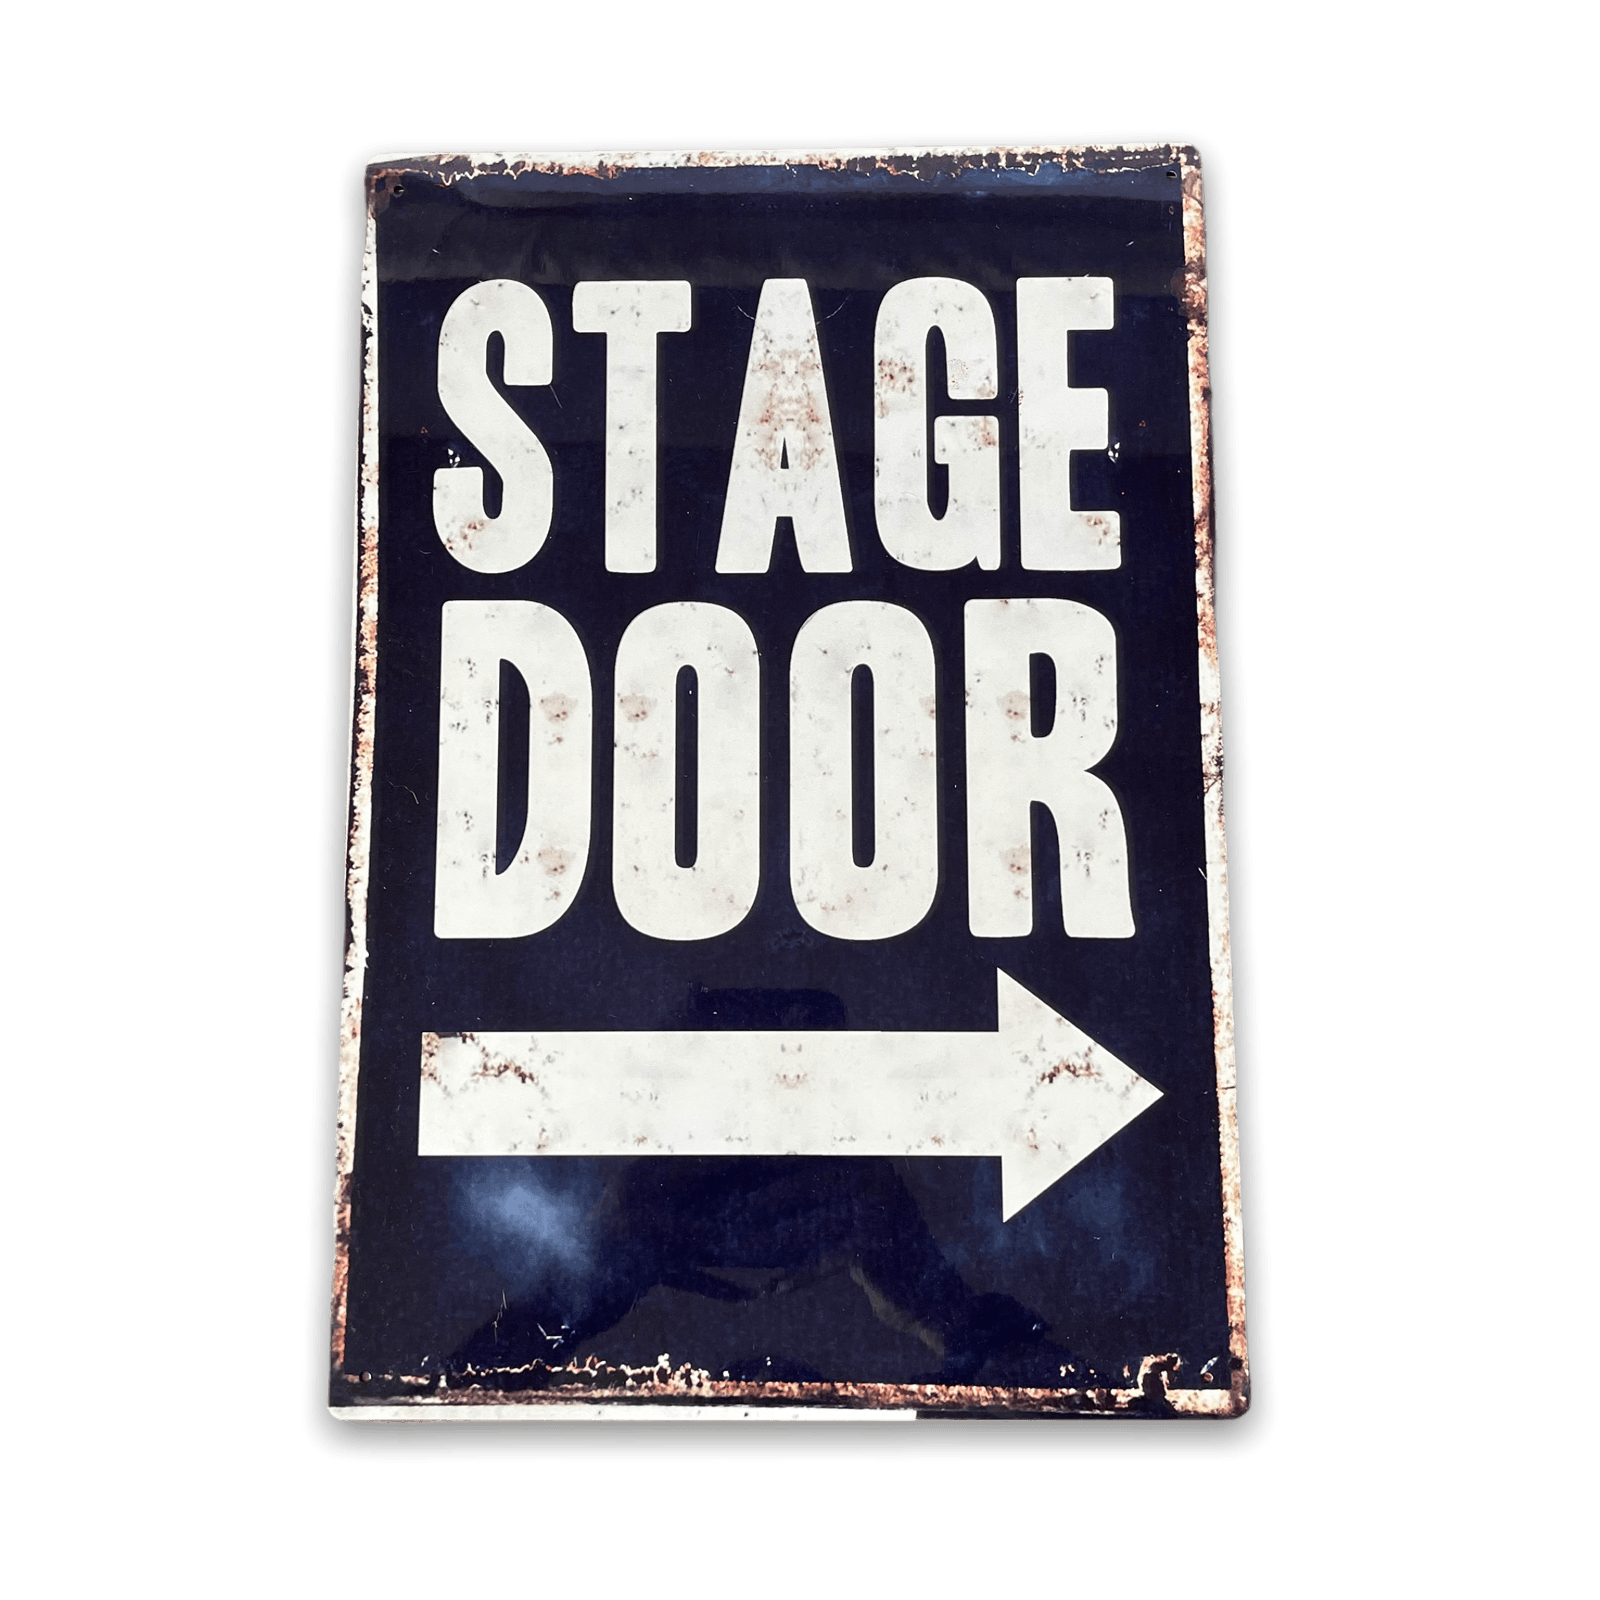 Vintage Metal Sign - Stage Door Metal Wall Sign-Signs & Rules